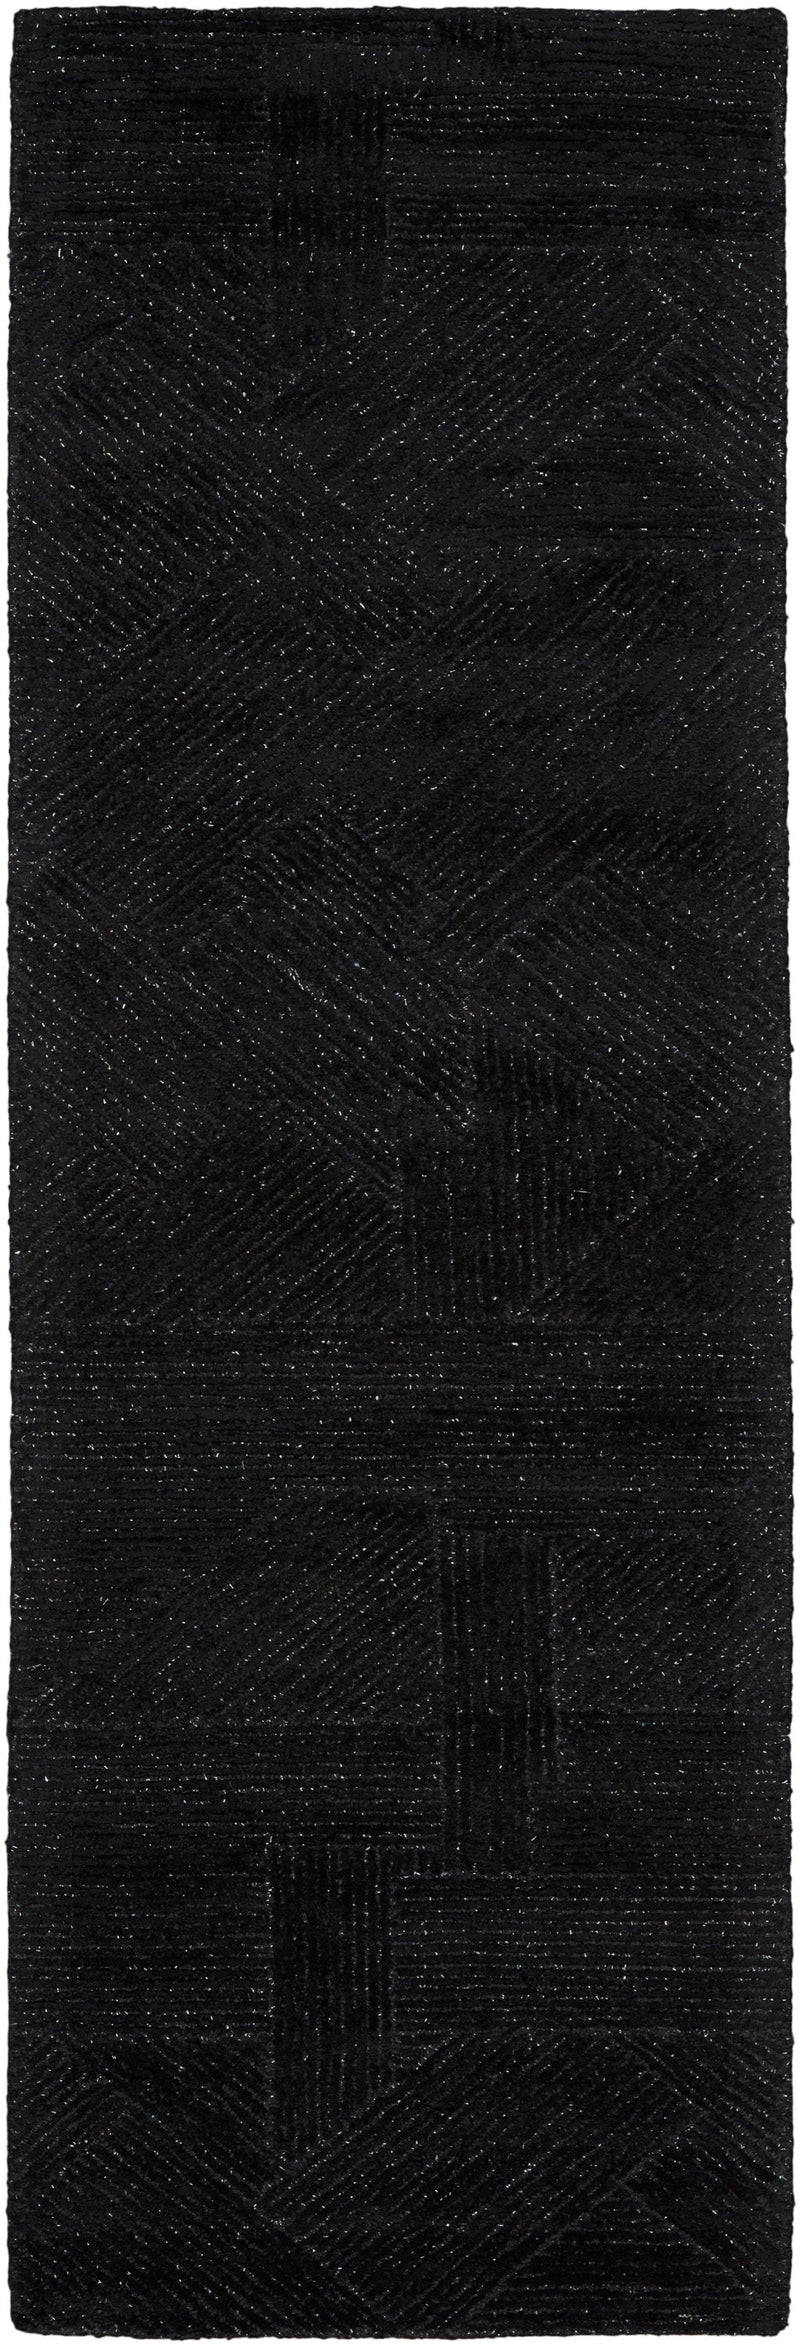 media image for ma30 star handmade black rug by nourison 99446880871 redo 2 213